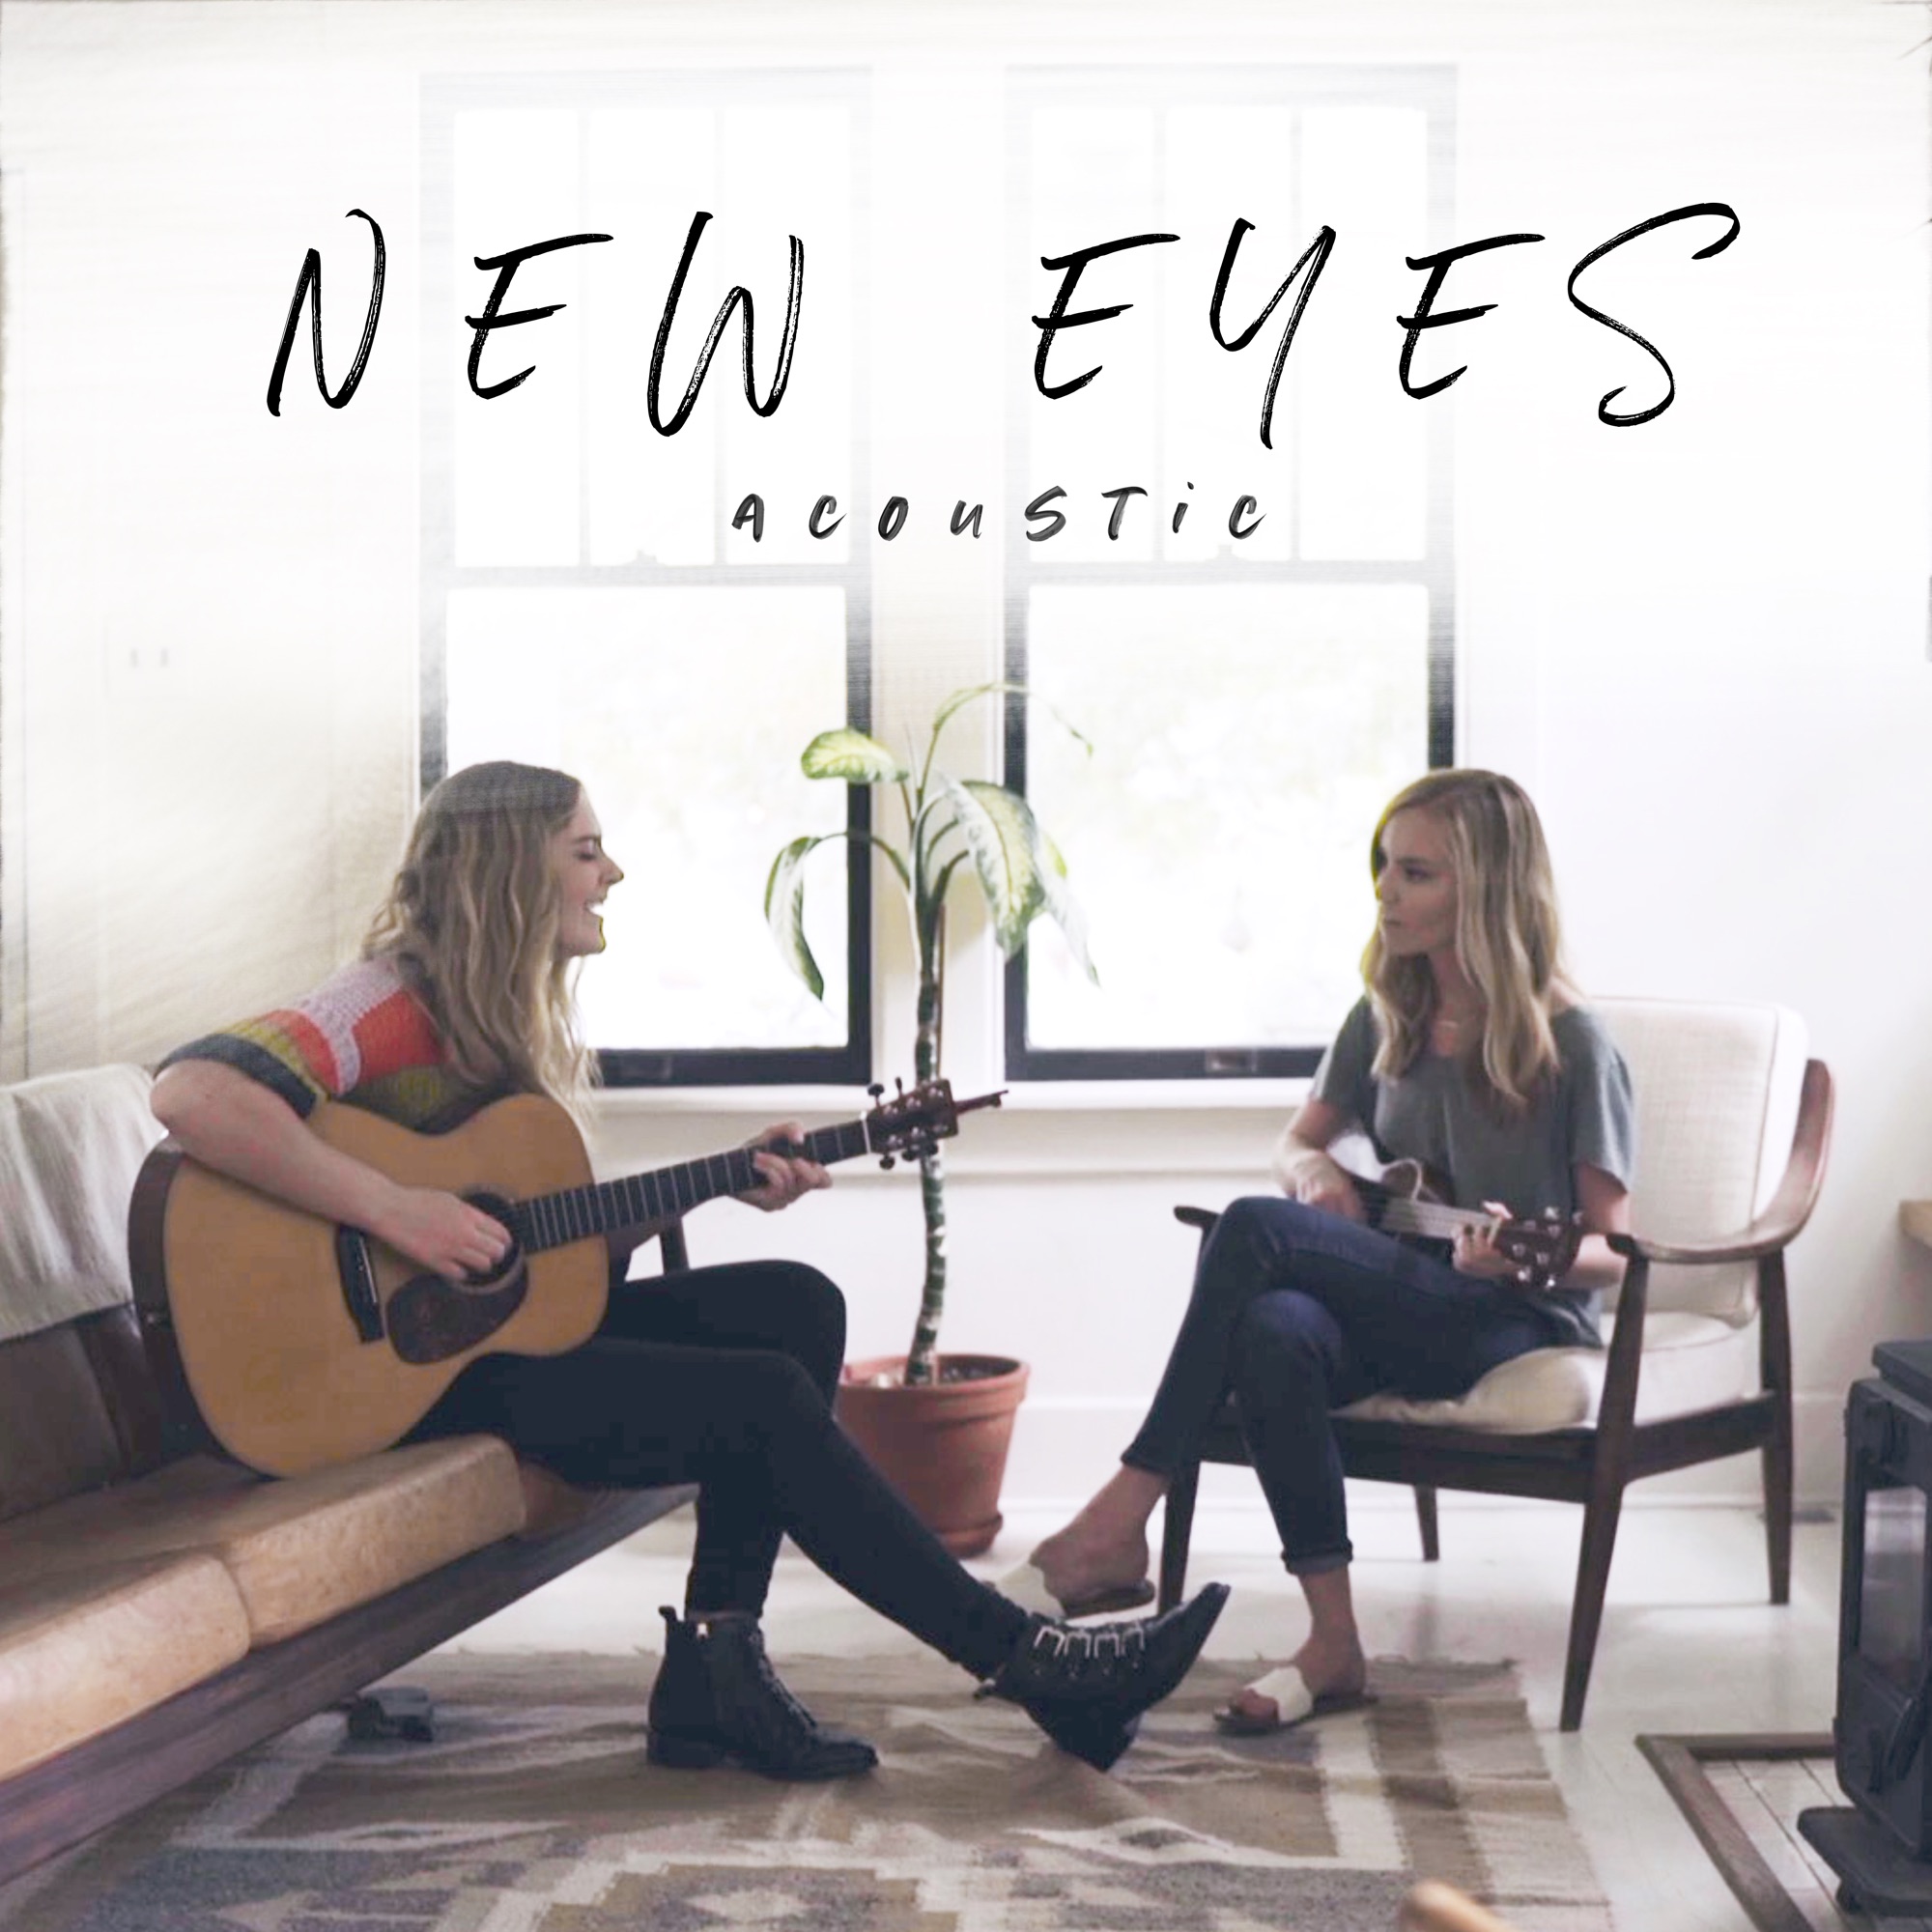 Art for New Eyes (Acoustic) by Megan Davies & Jaclyn Davies